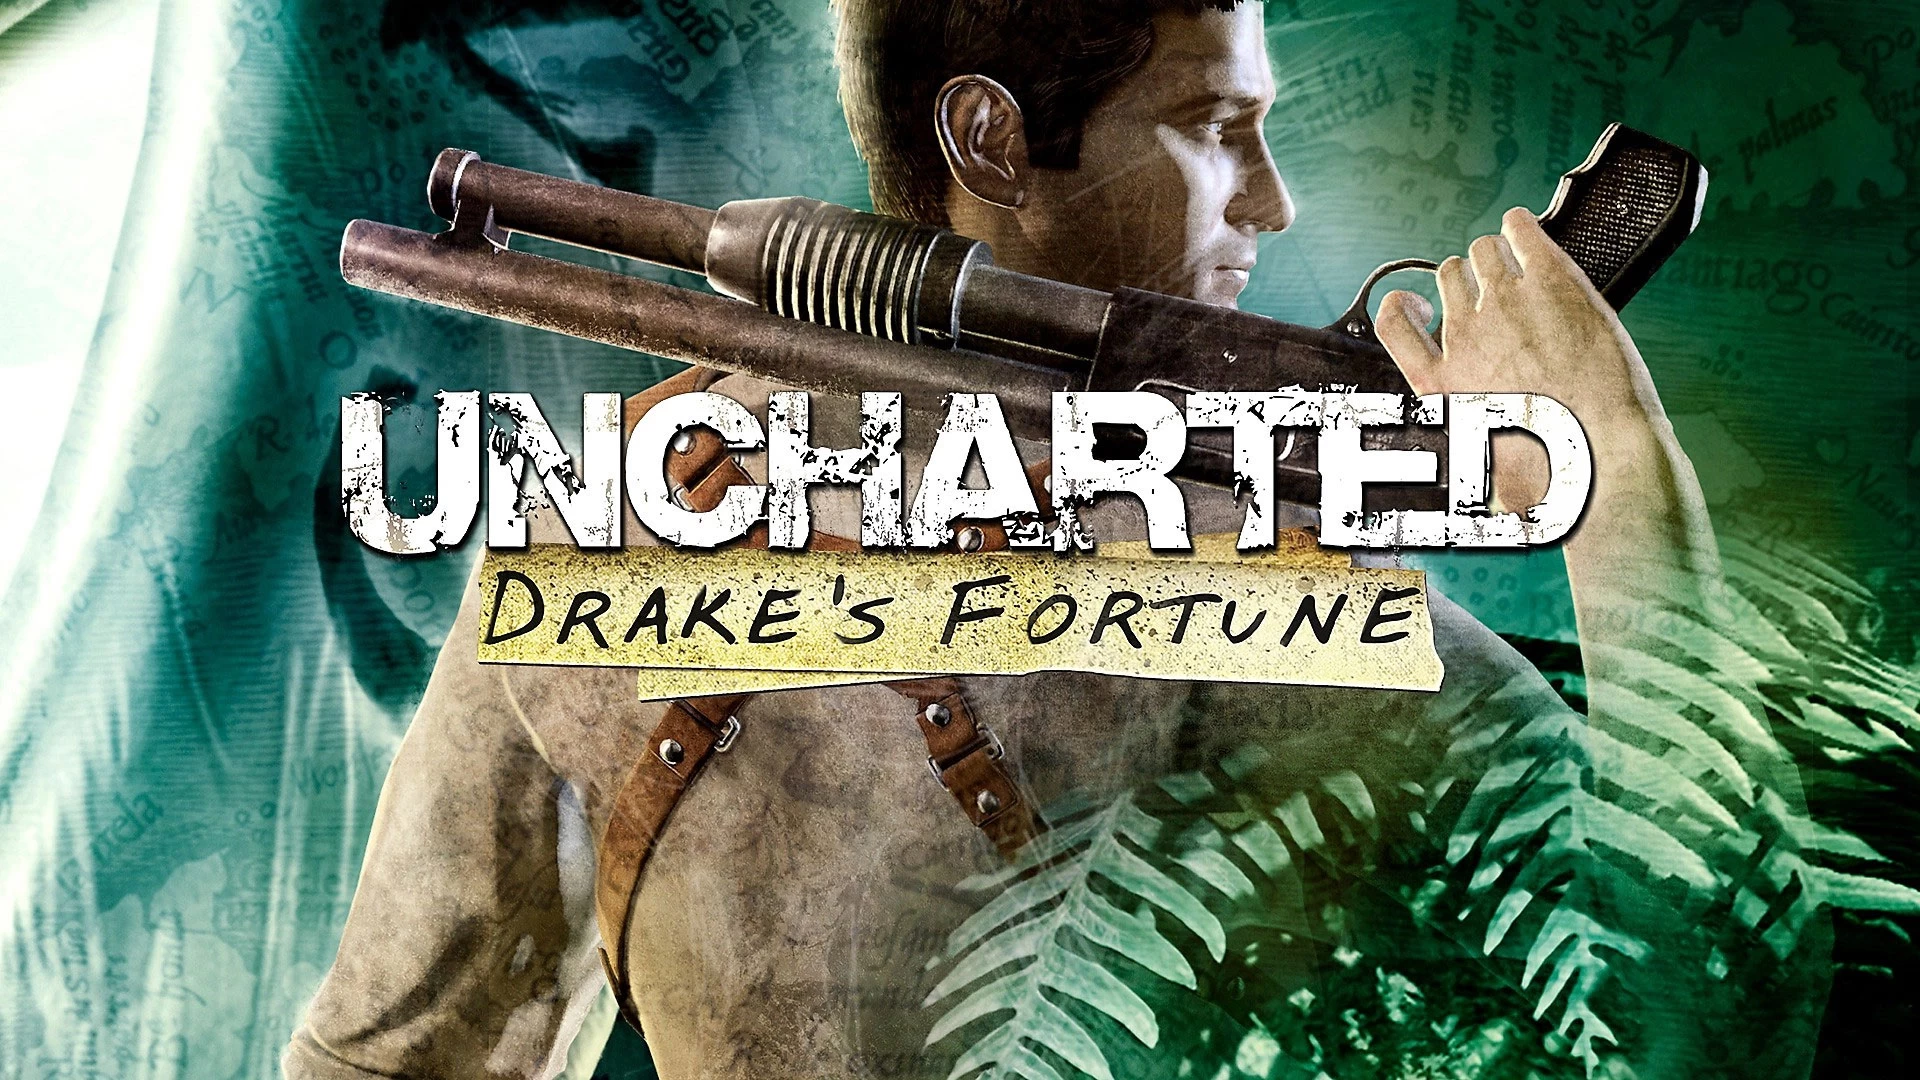 ریمیک بازی Uncharted: Drake’s Fortune